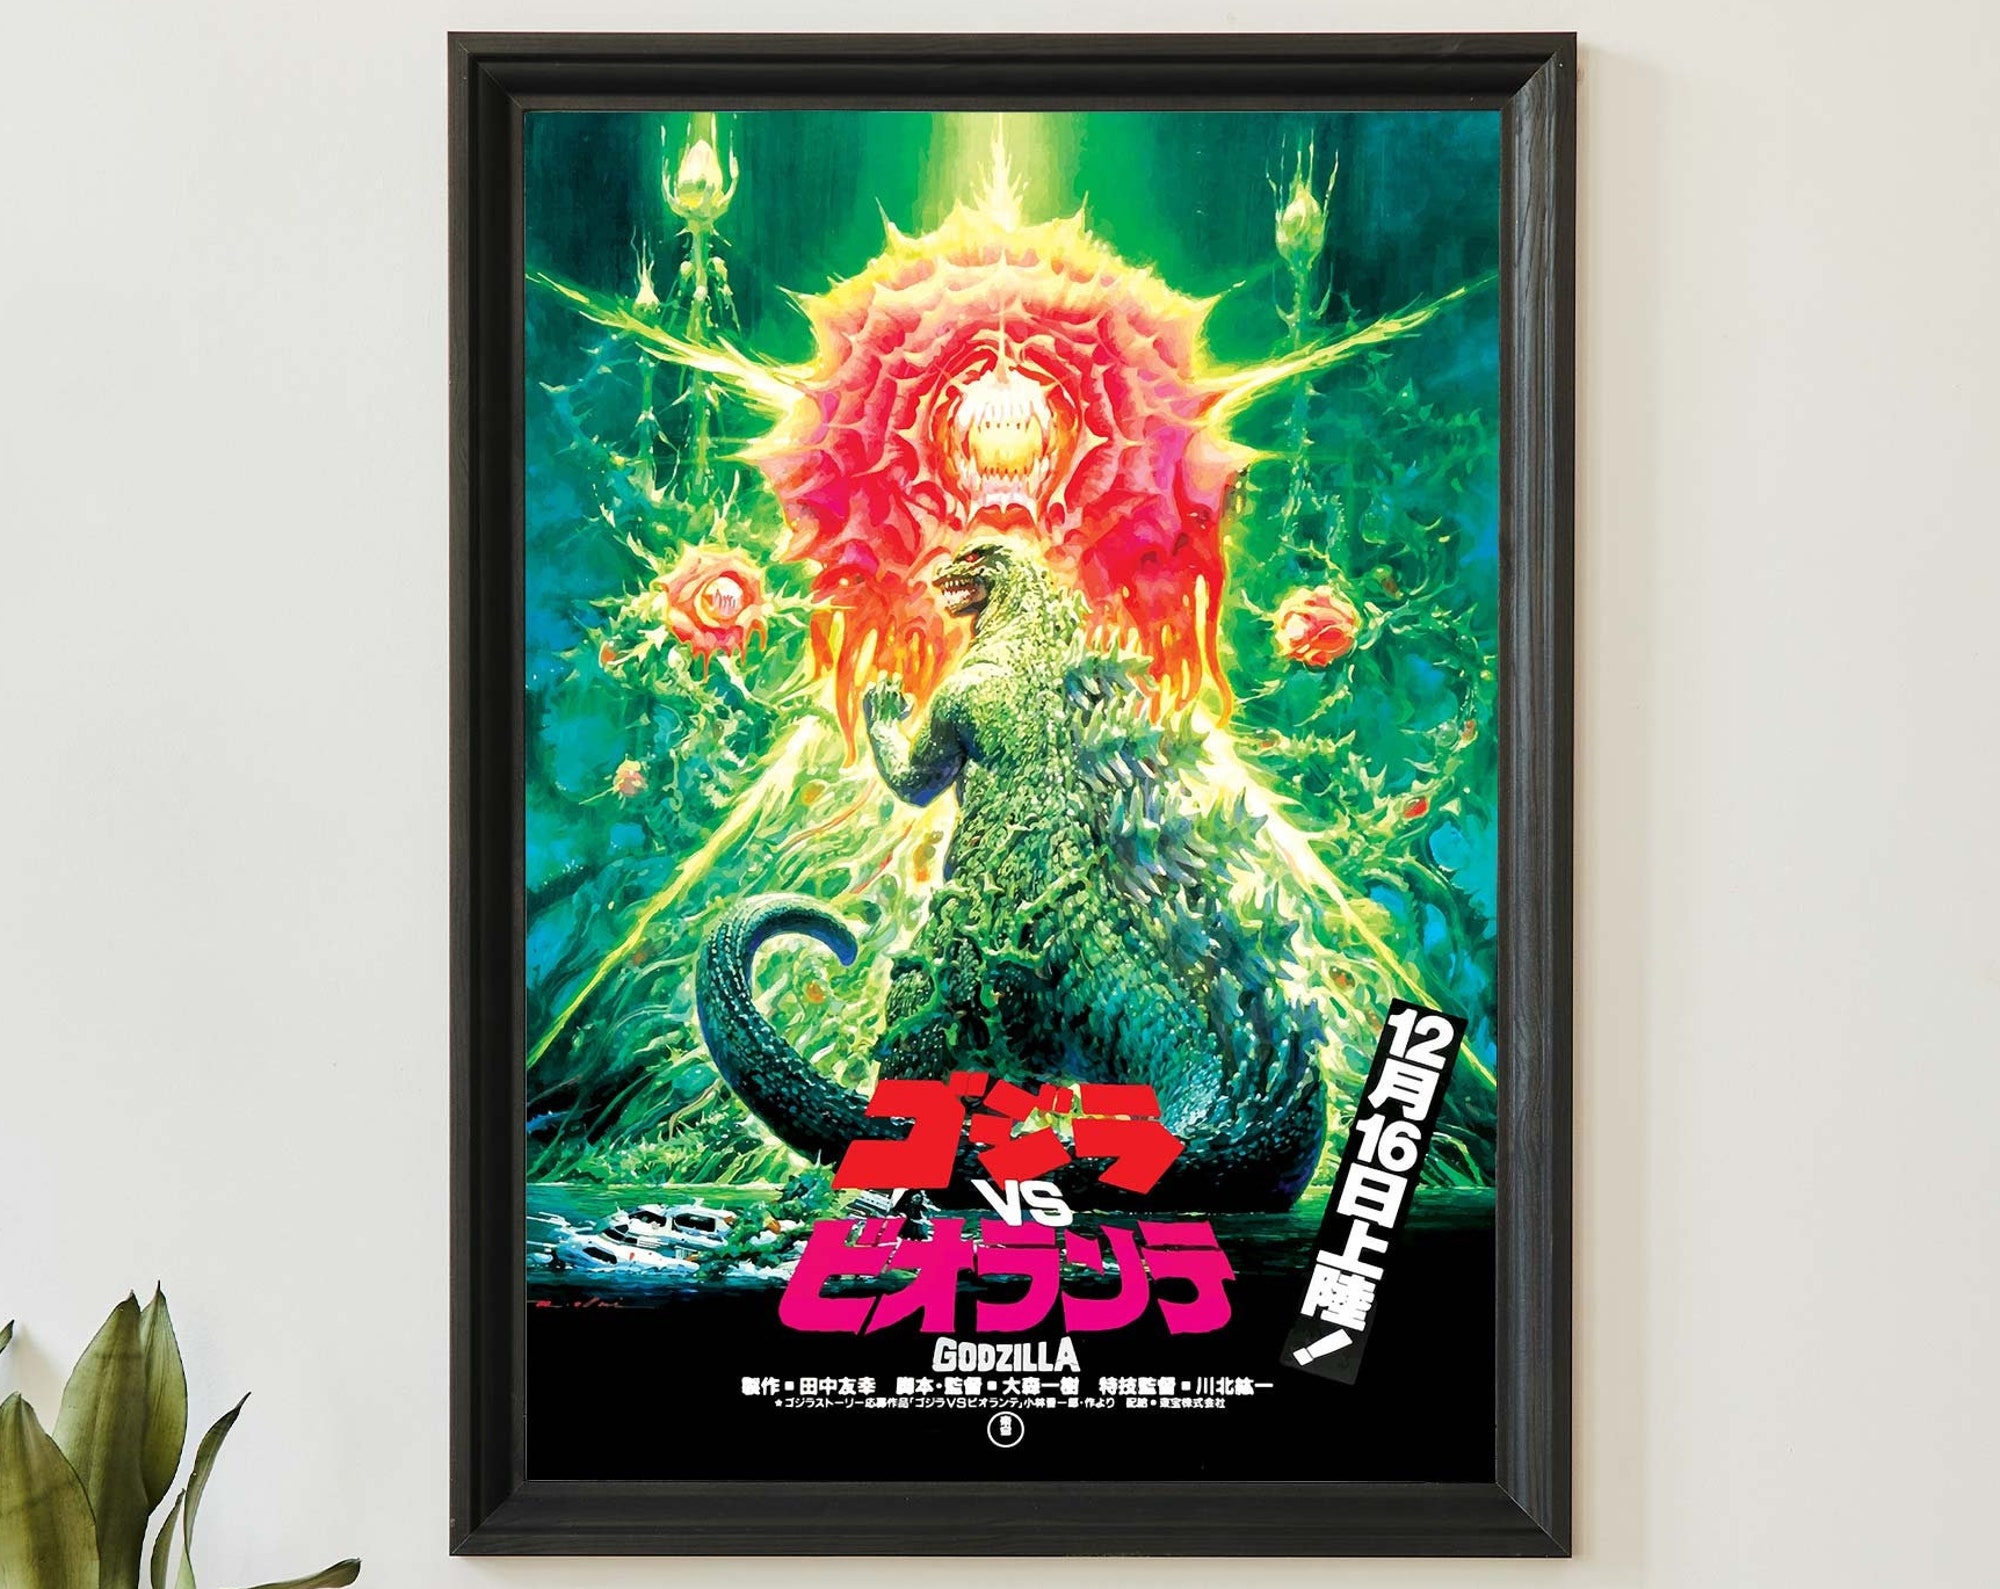 Vintage god zilla Movie Poster Print, Retro Science Fiction Wall Art